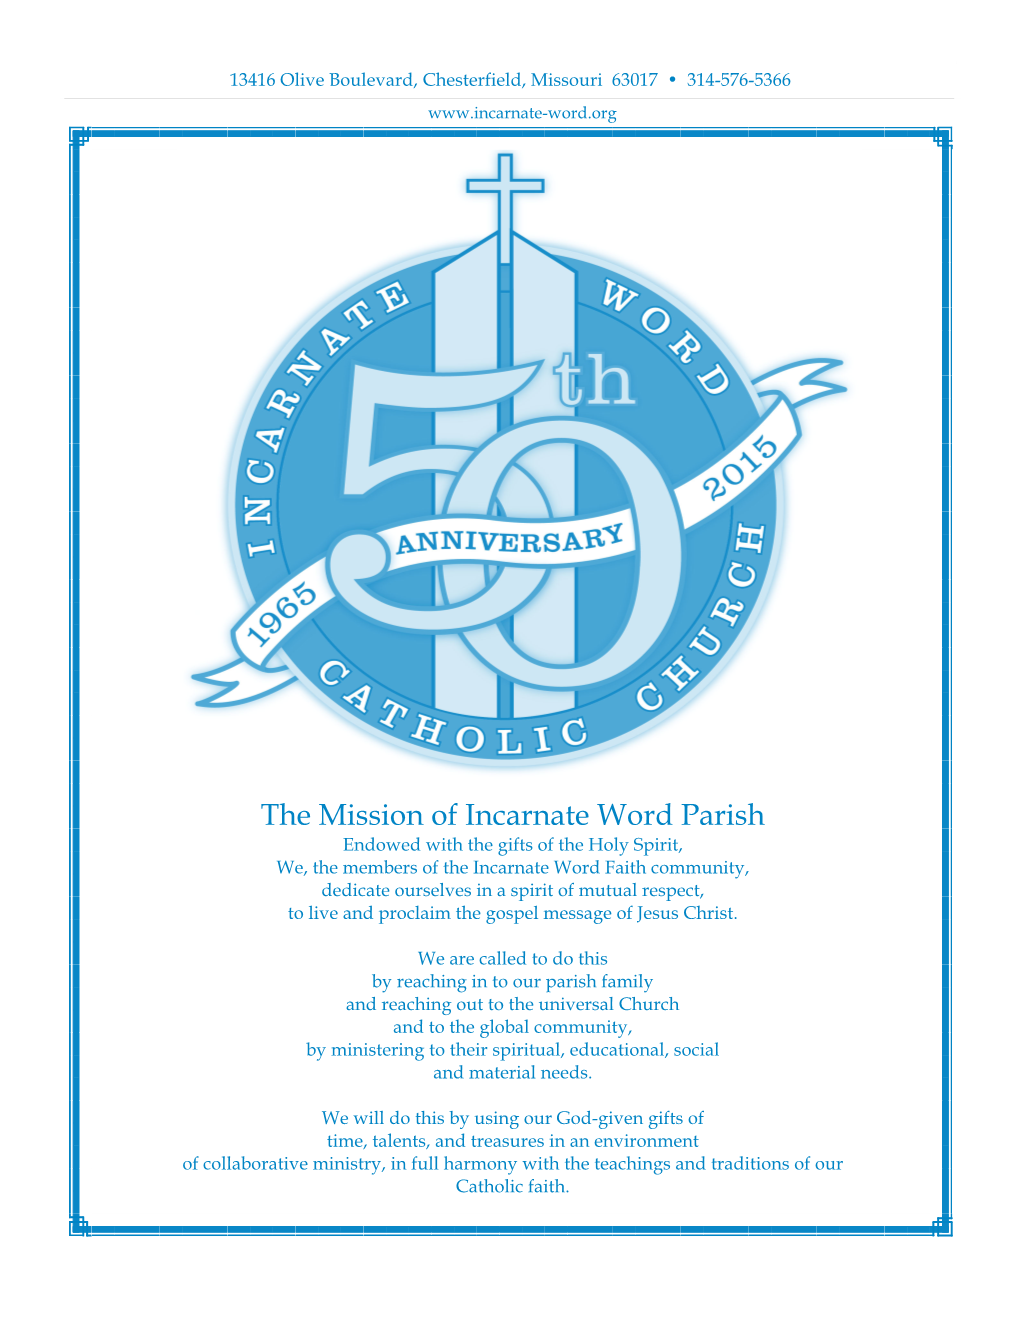 The Mission of Incarnate Word Parish